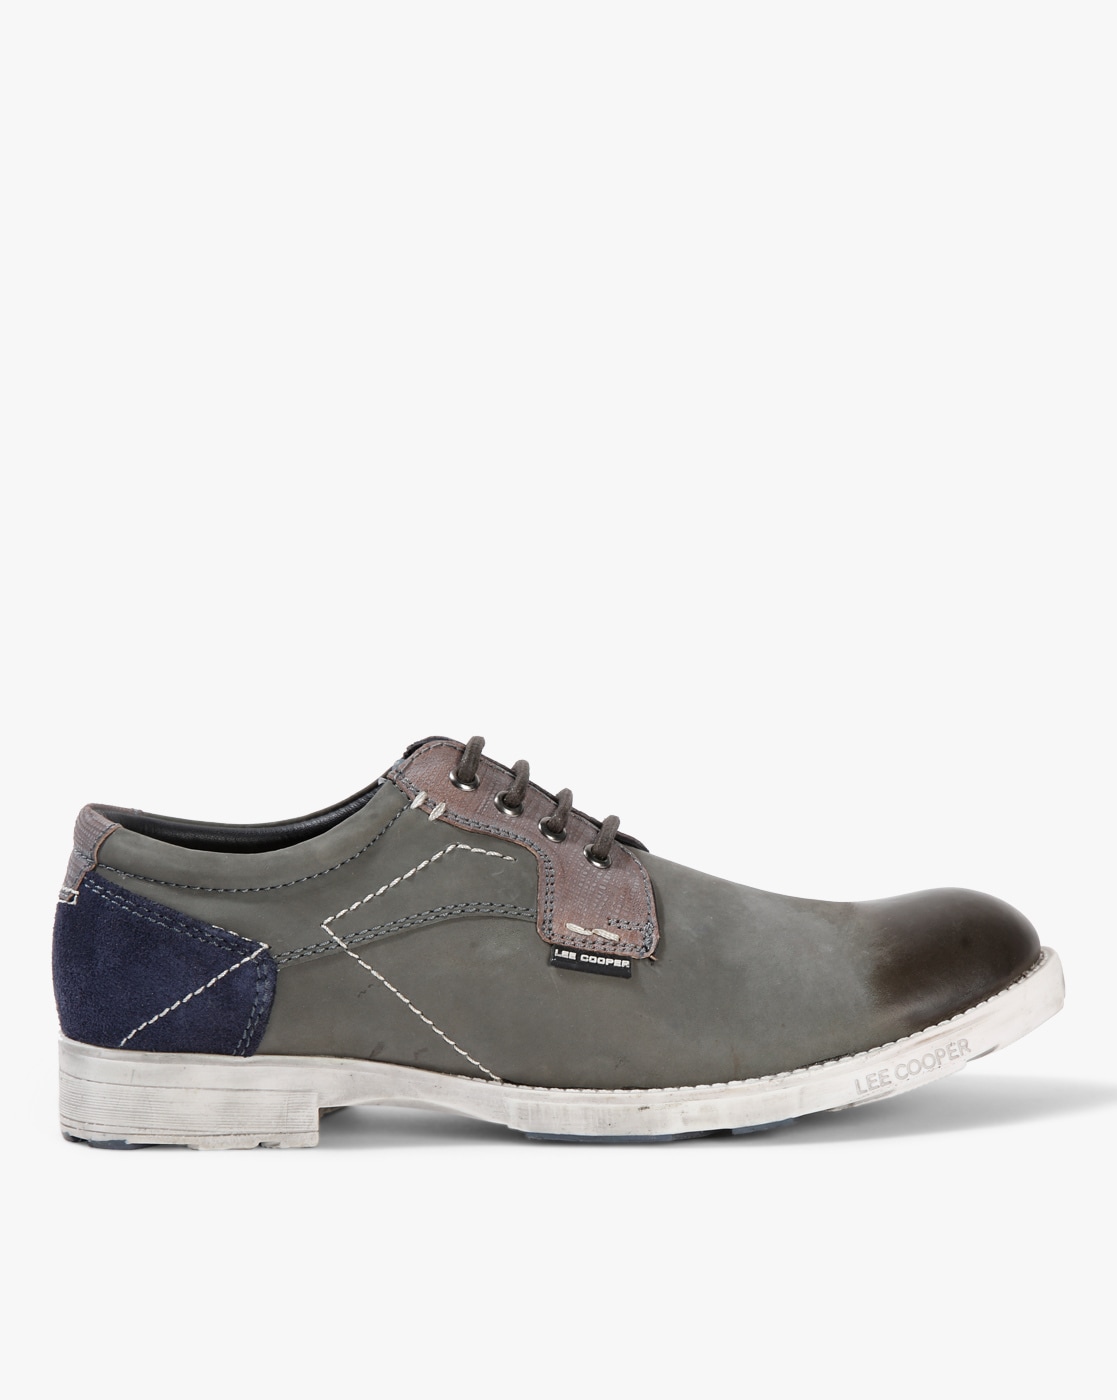 lee cooper grey shoes